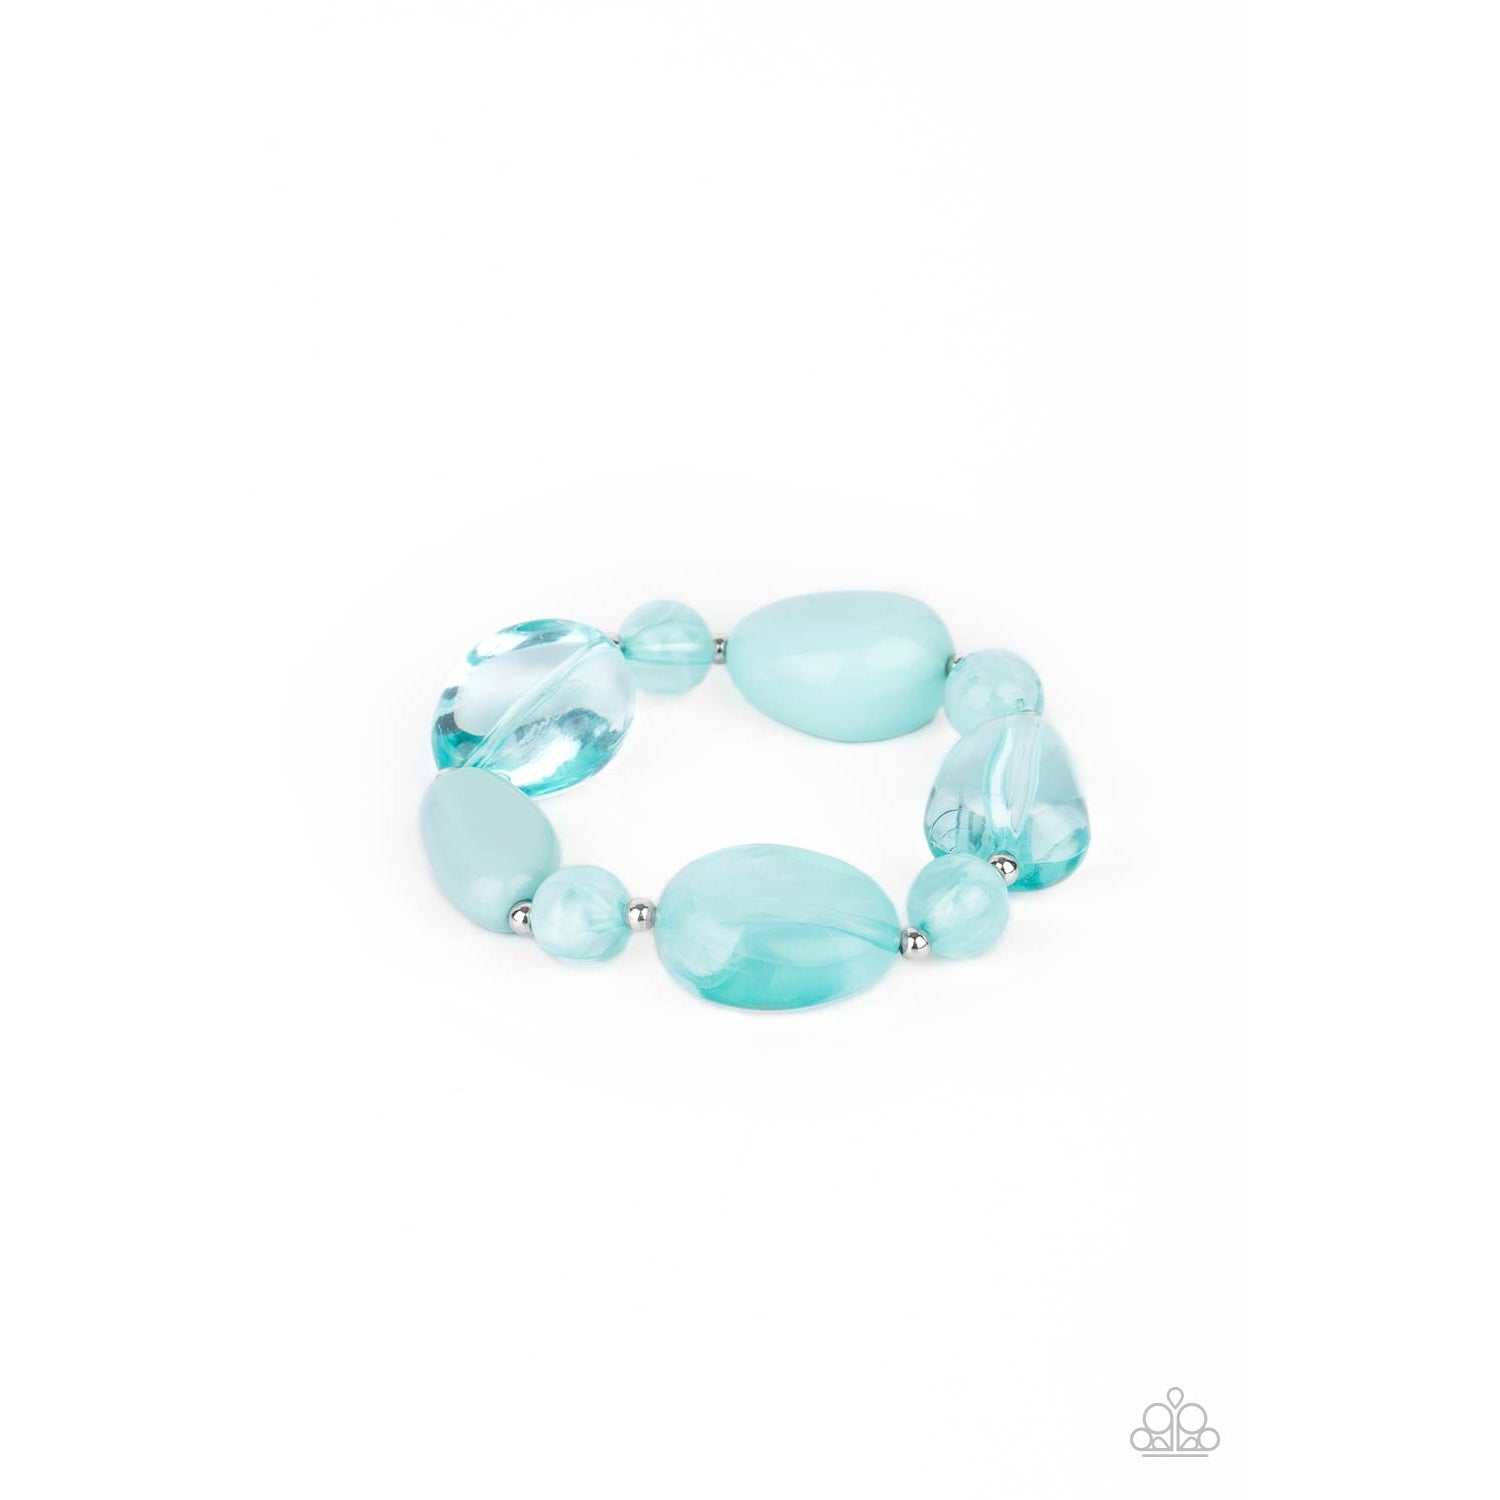 I Need a STAYCATION - Blue Stone Beads Bracelet - Paparazzi Accessories - GlaMarous Titi Jewels